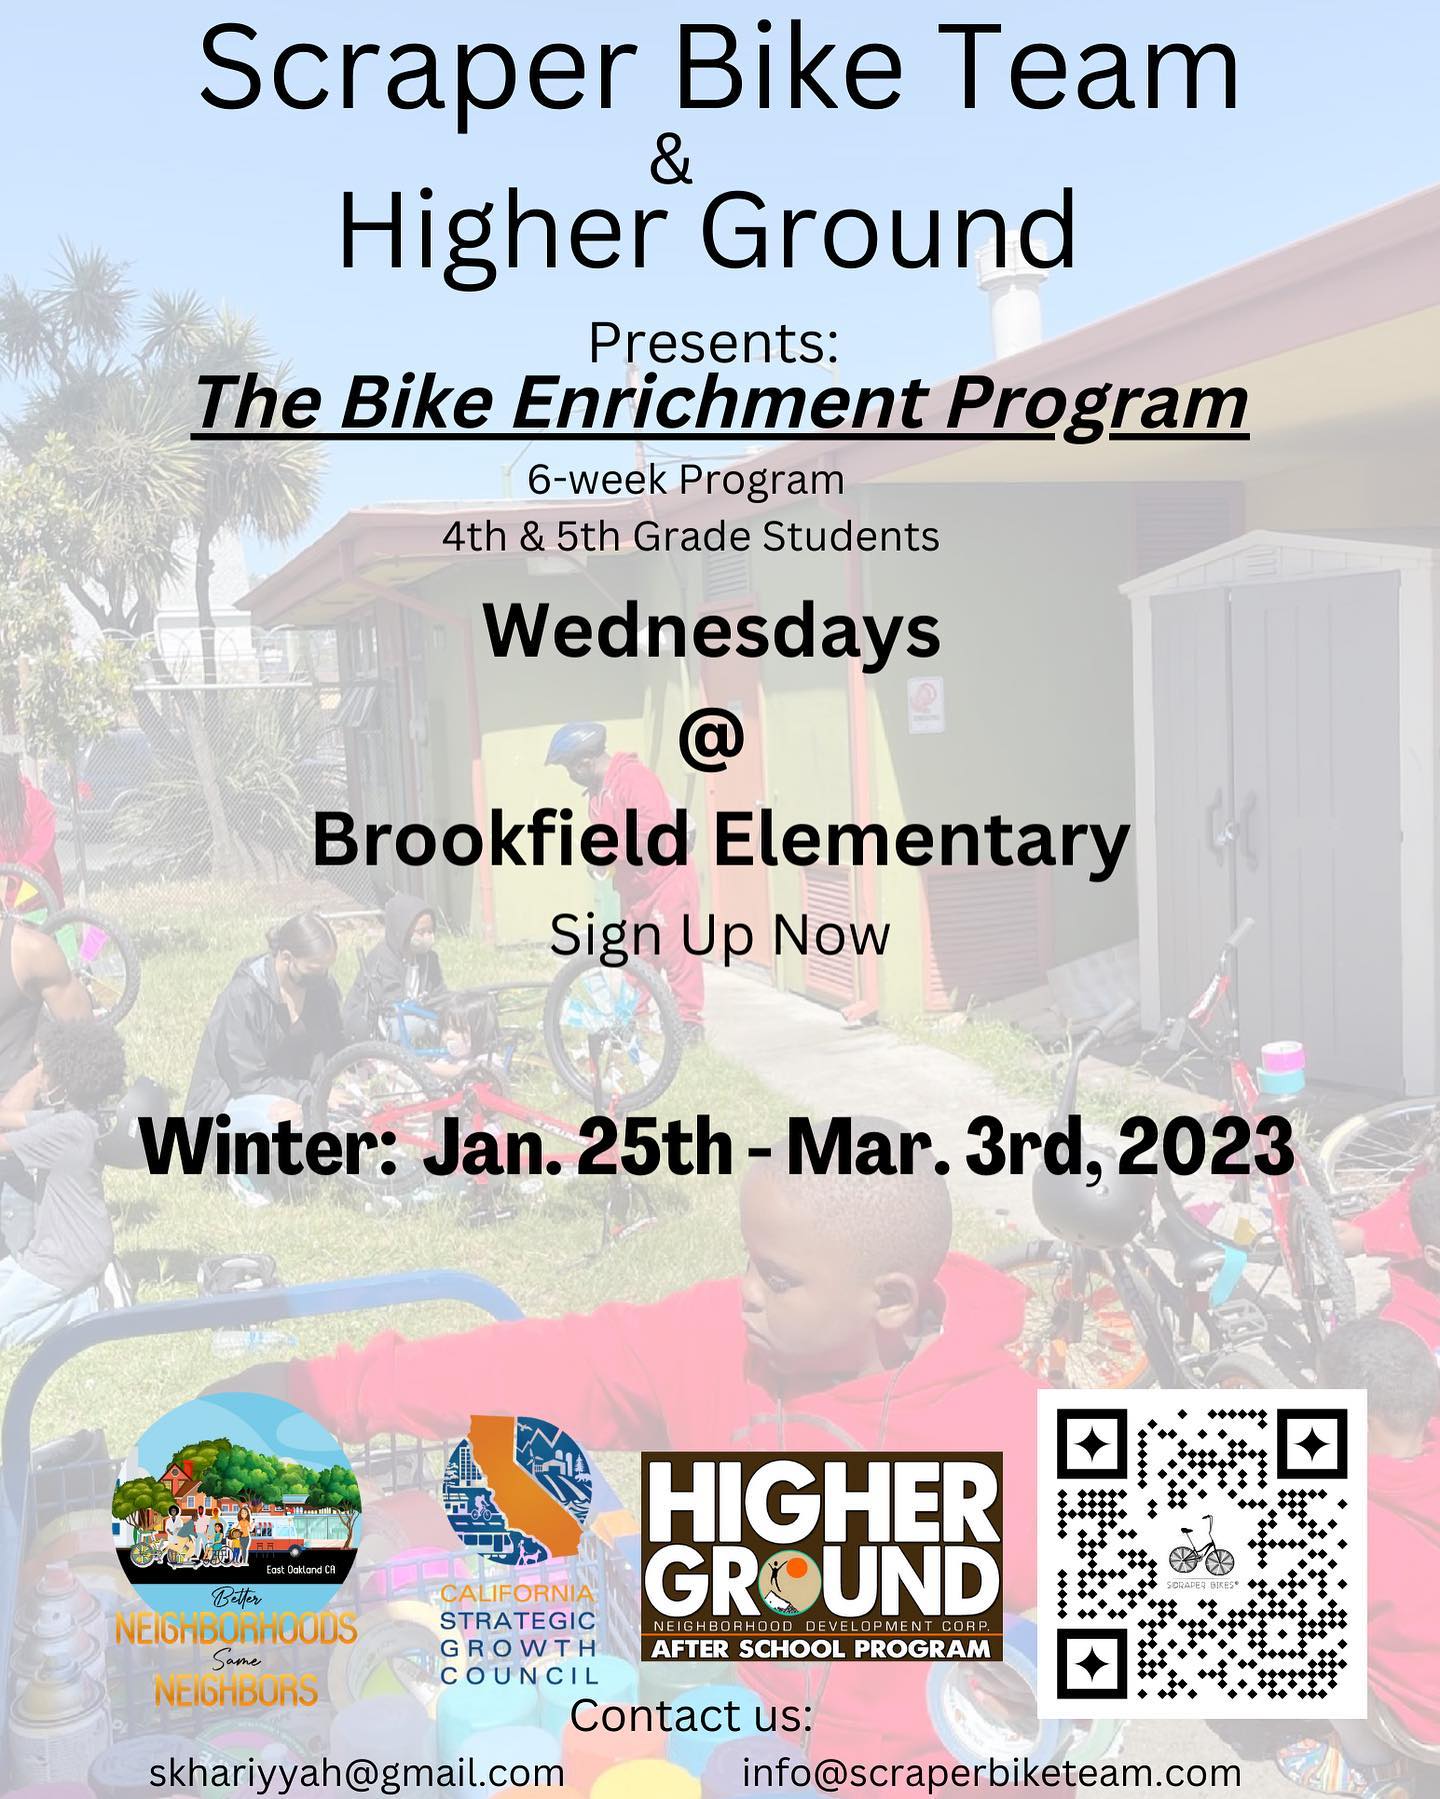 Bike enrichment program at Brookfield Elementary